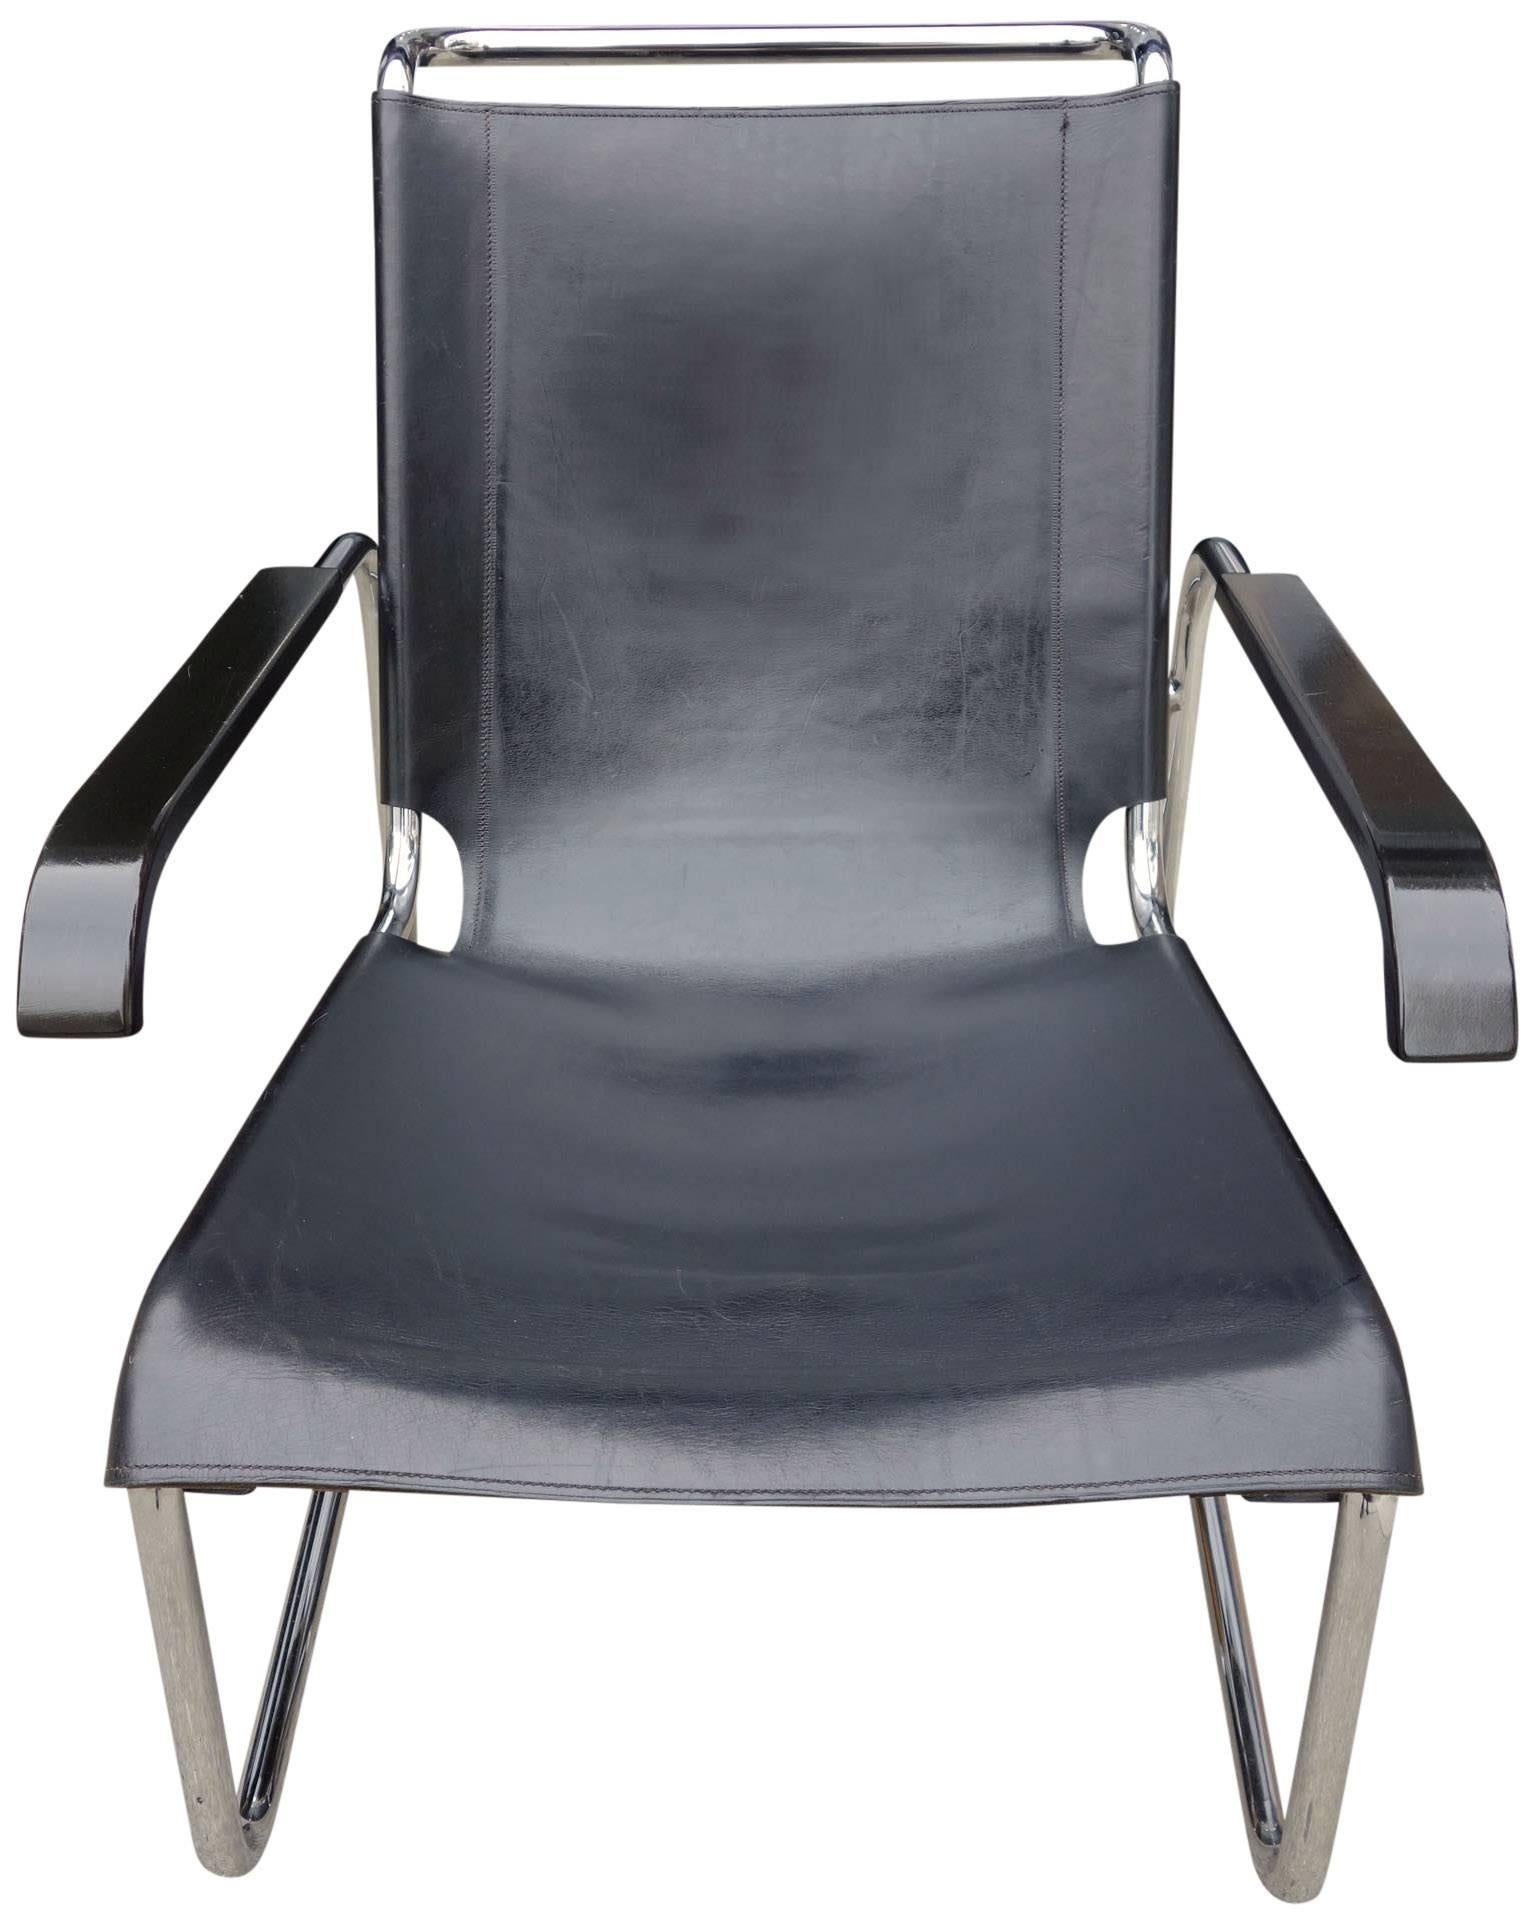 marcel lajos breuer lounge chair model b 35